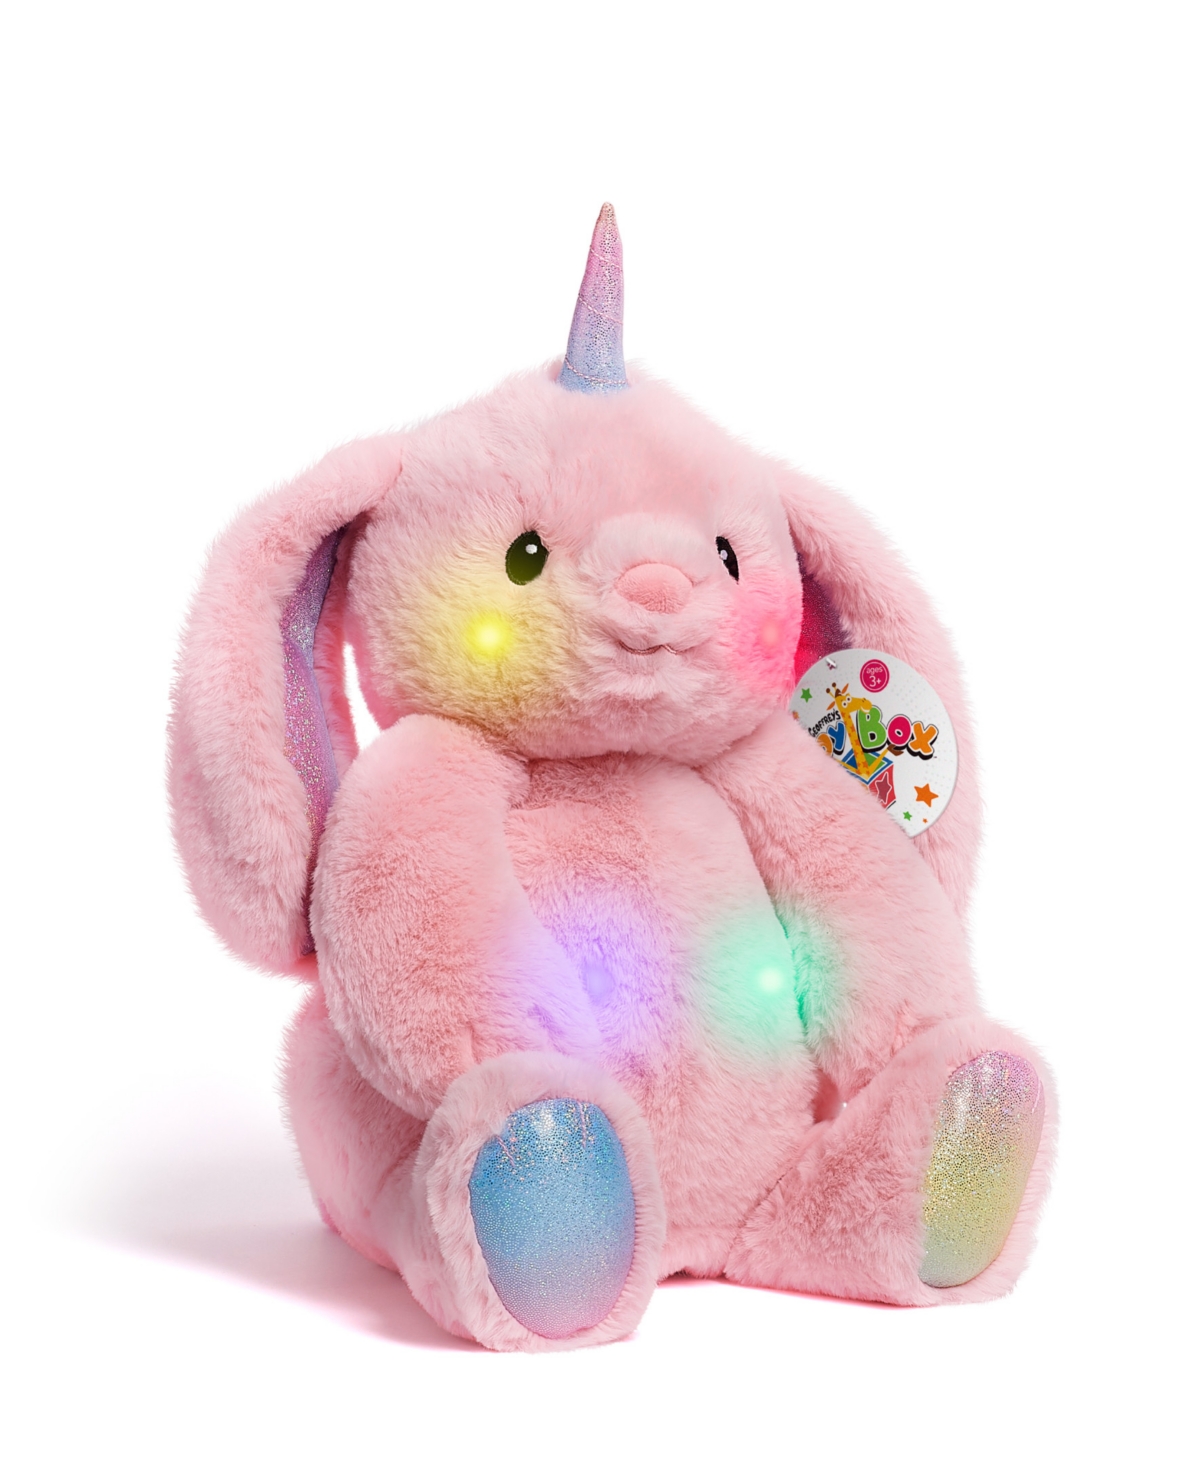 Geoffrey's Toy Box 15" Bunnycorn Plush Stuffed Animal with Led Lights and Sound $14.99 + Free Pickup